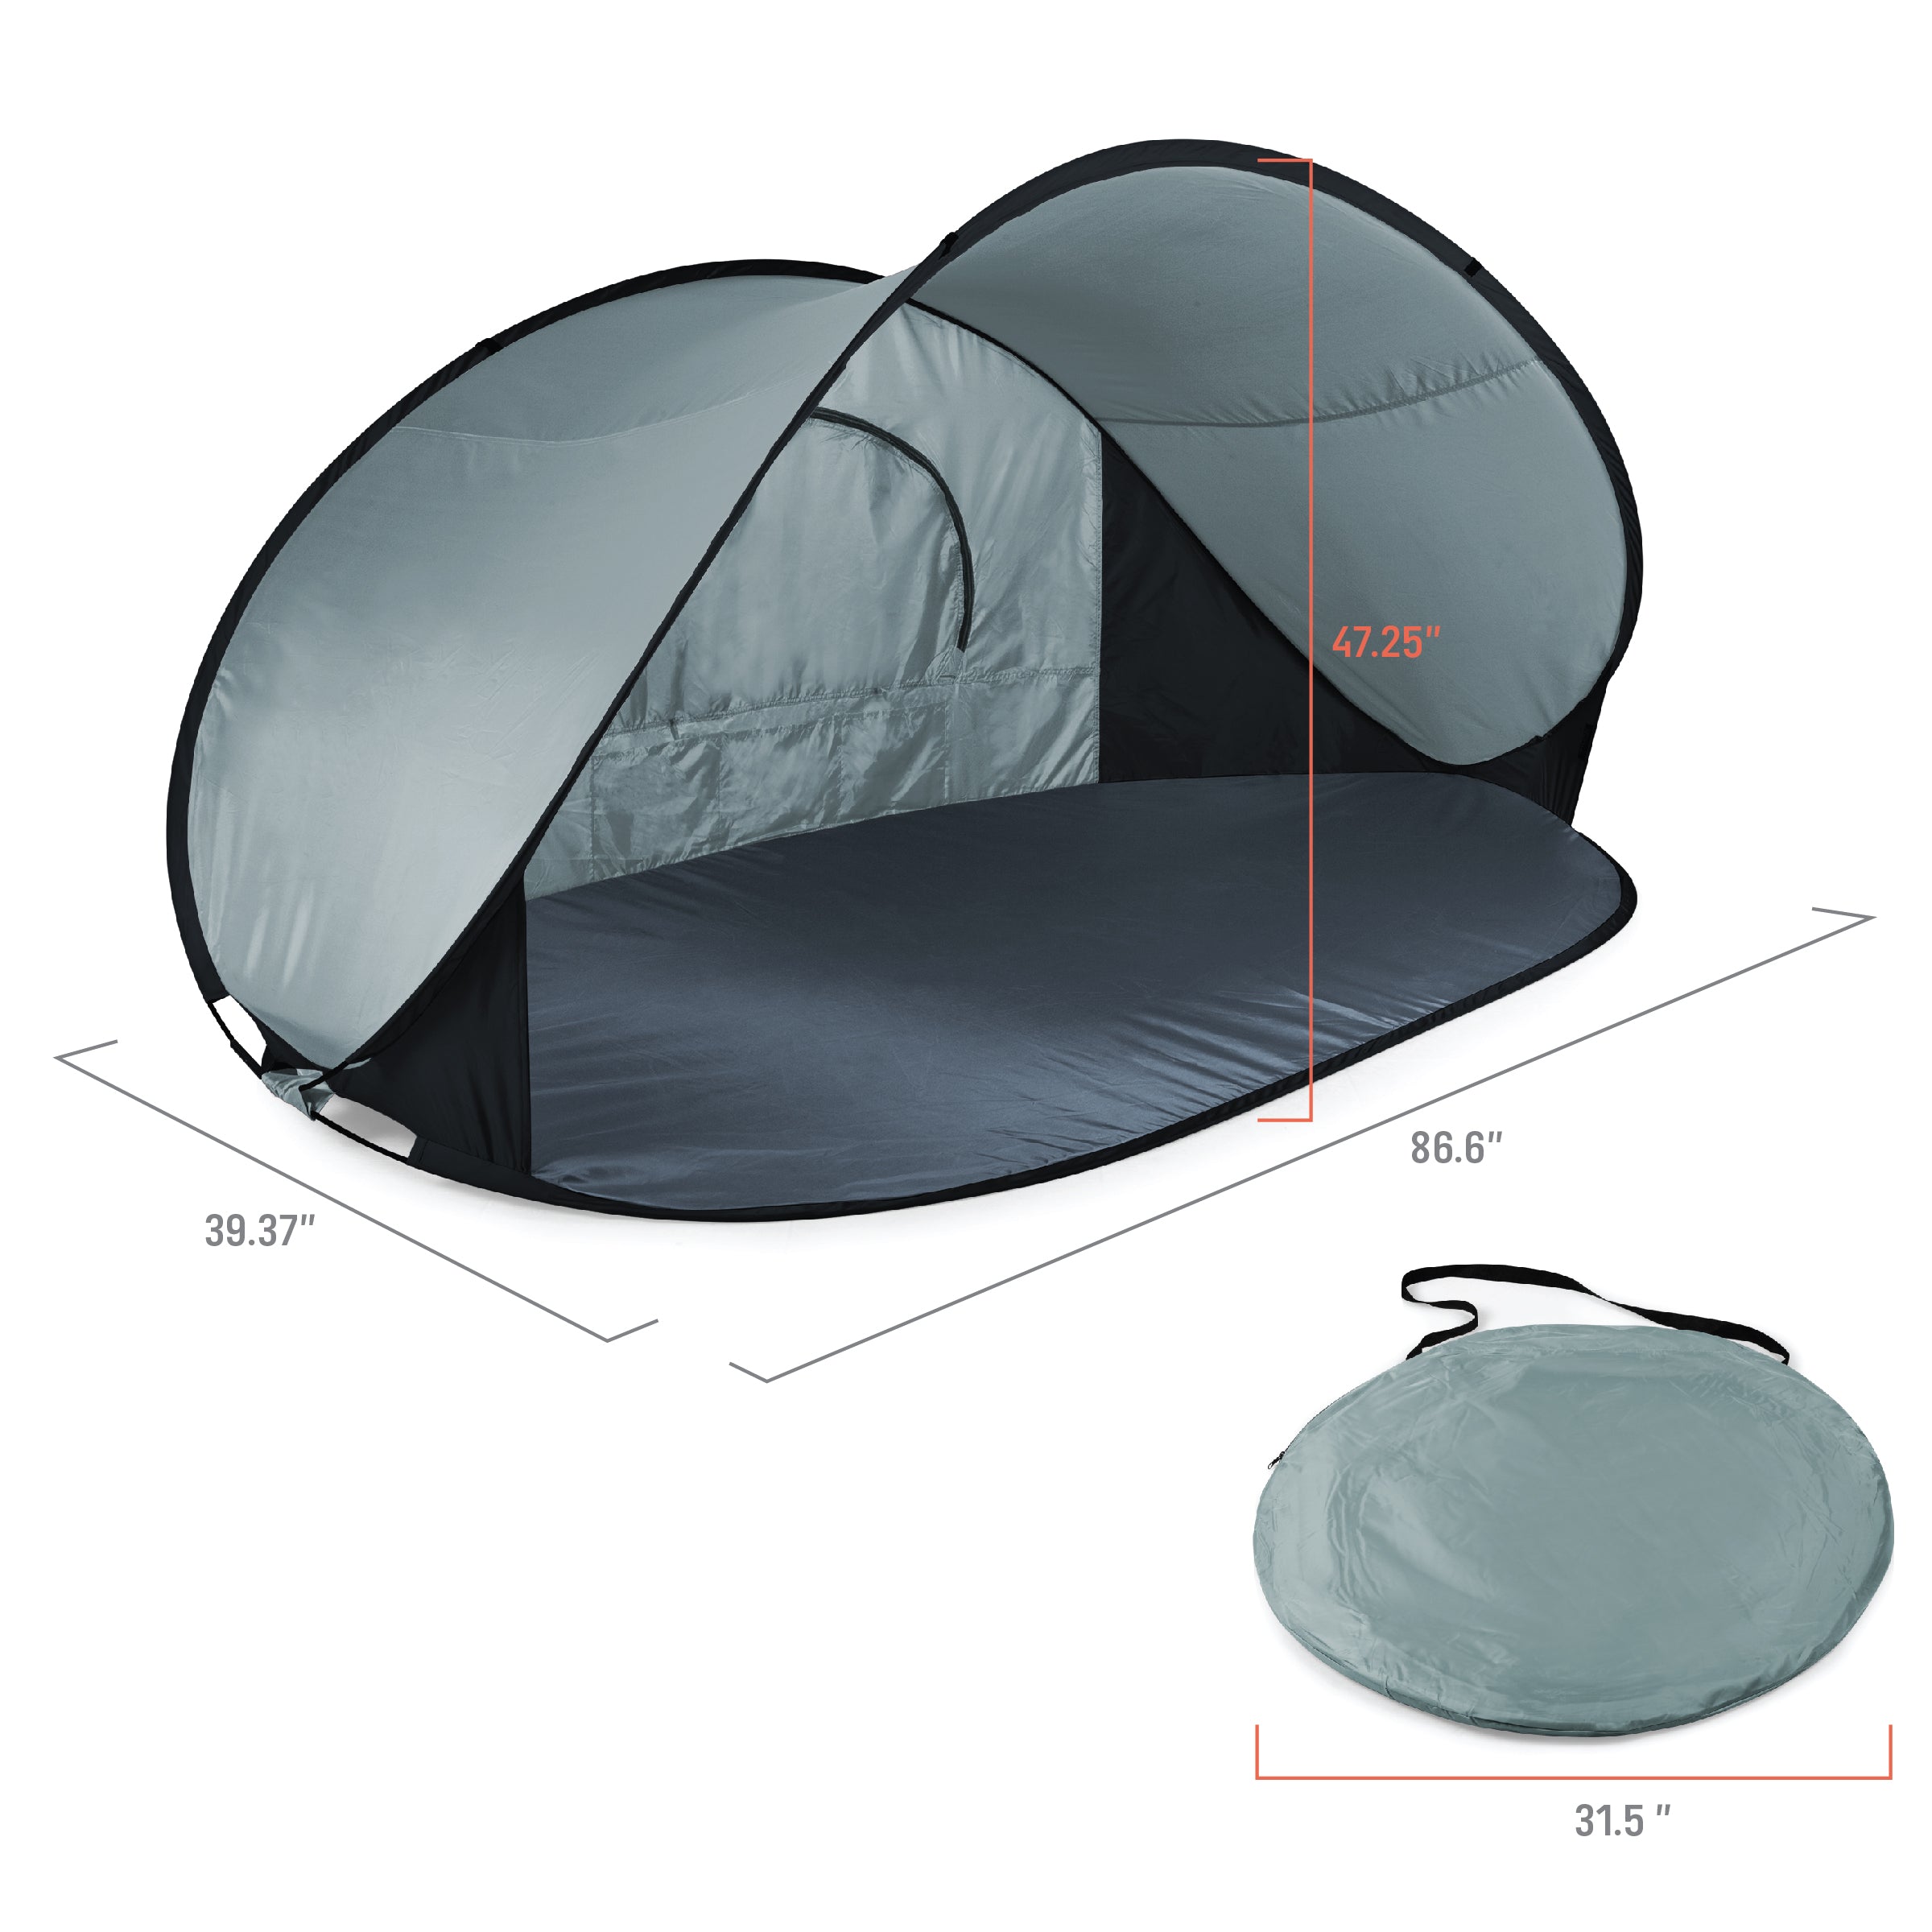 Las Vegas Raiders - Manta Portable Beach Tent